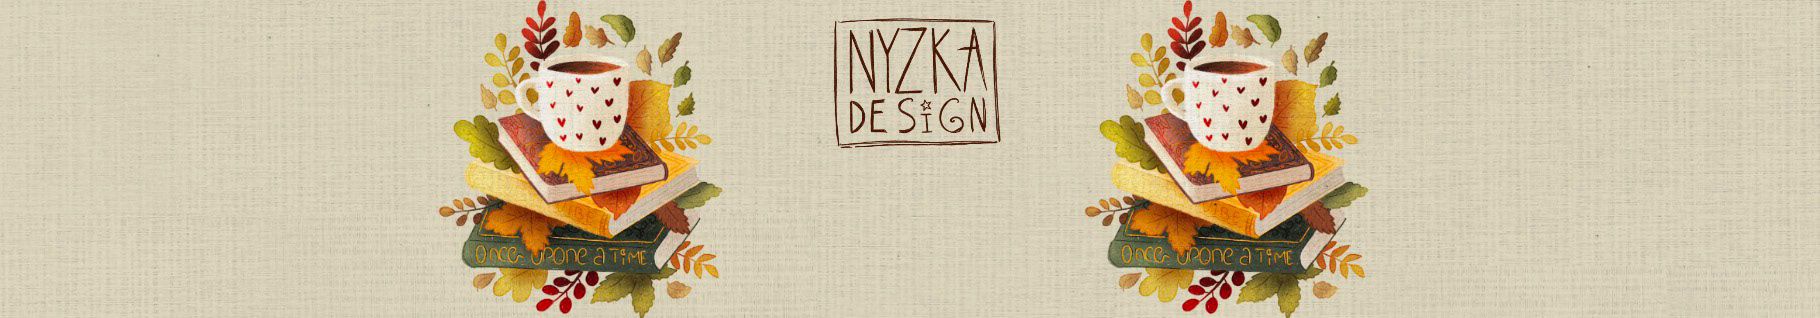 Lidiia Nyz's profile banner